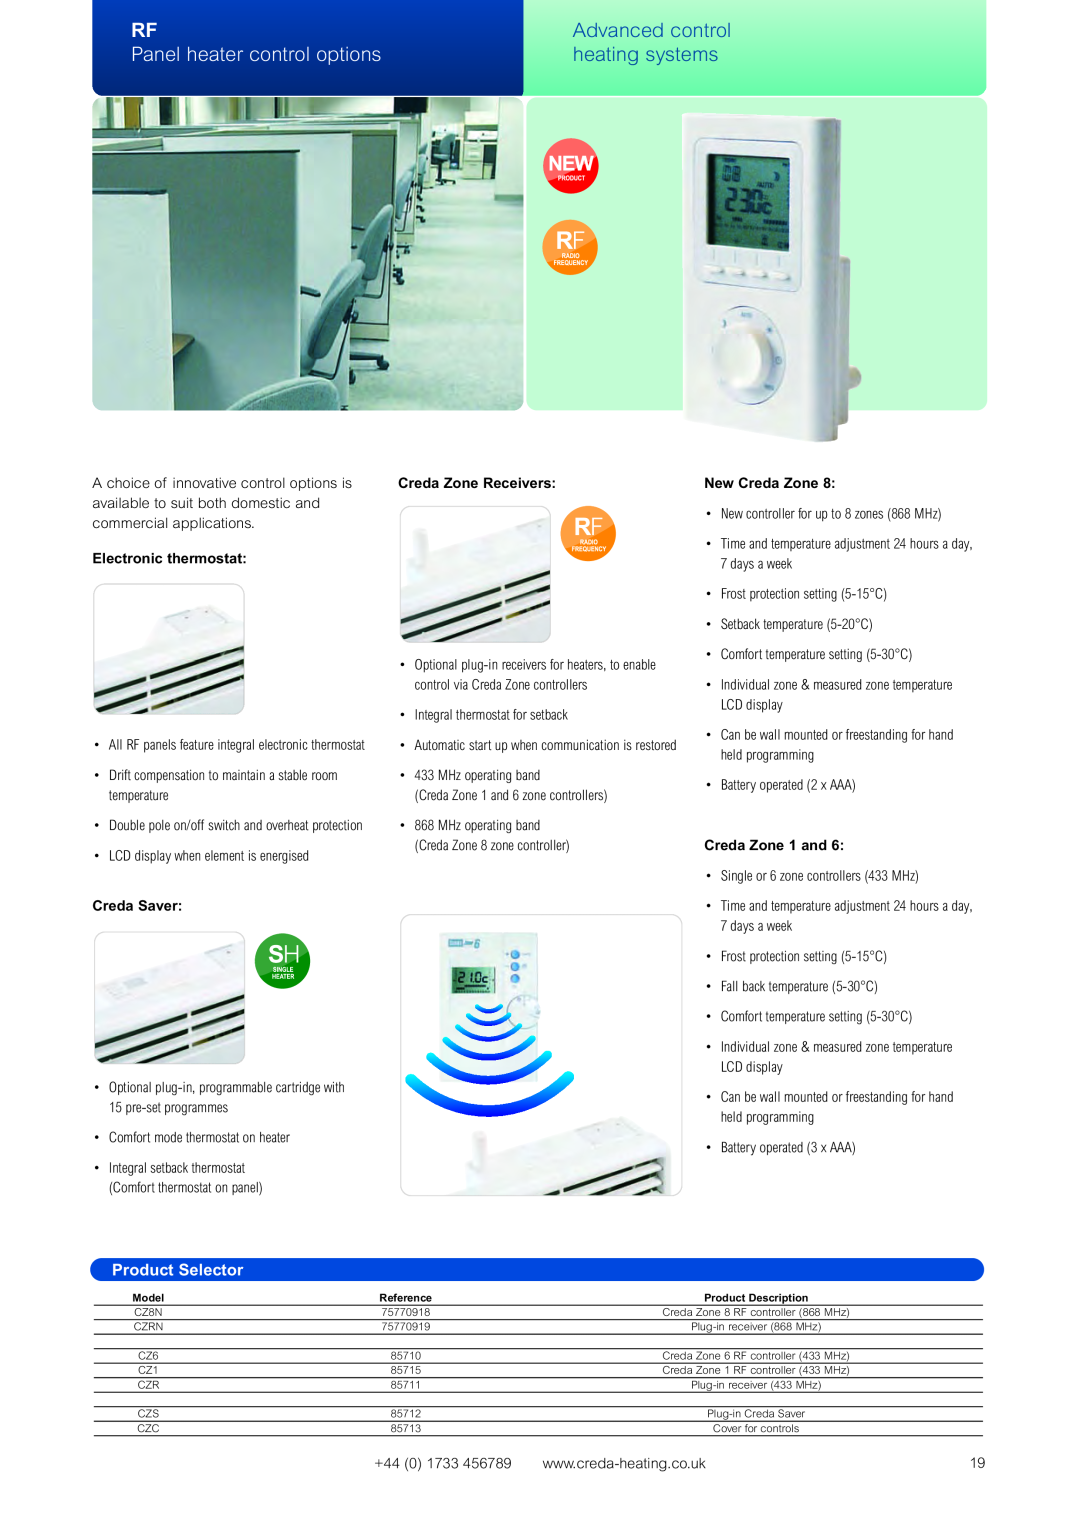 Creda Advanced Control Heating Systems Panel heater control options, Creda Zone Receivers, New Creda Zone, Creda Saver 